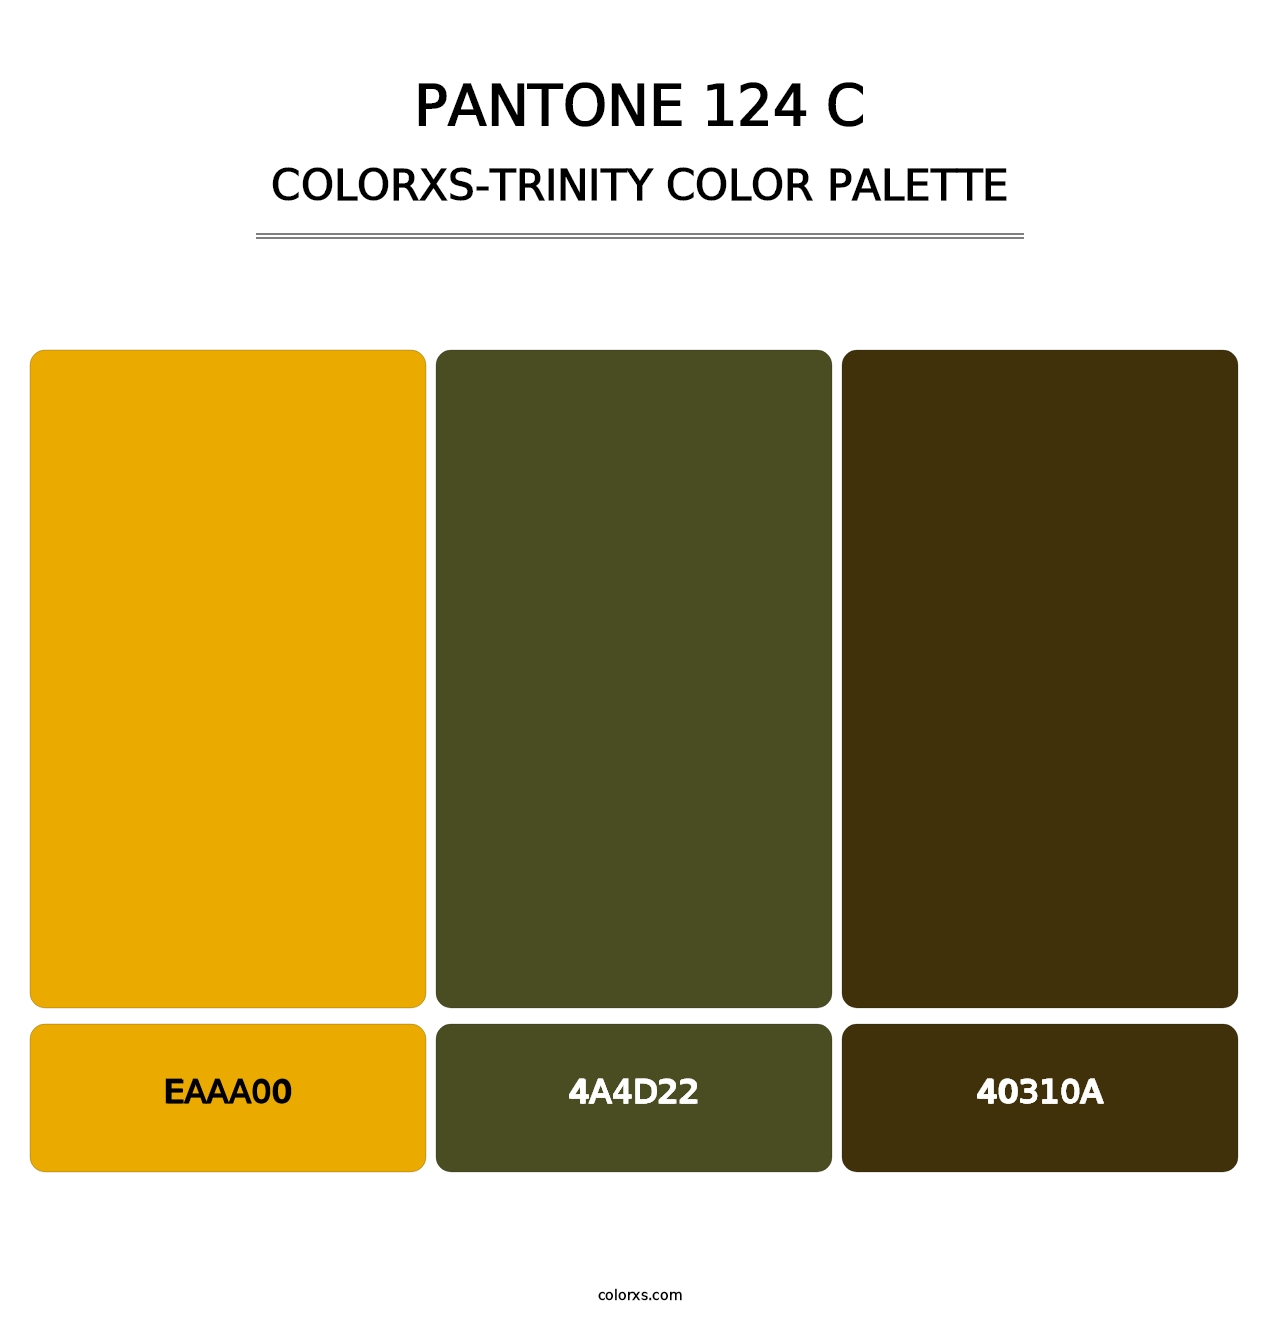 PANTONE 124 C - Colorxs Trinity Palette